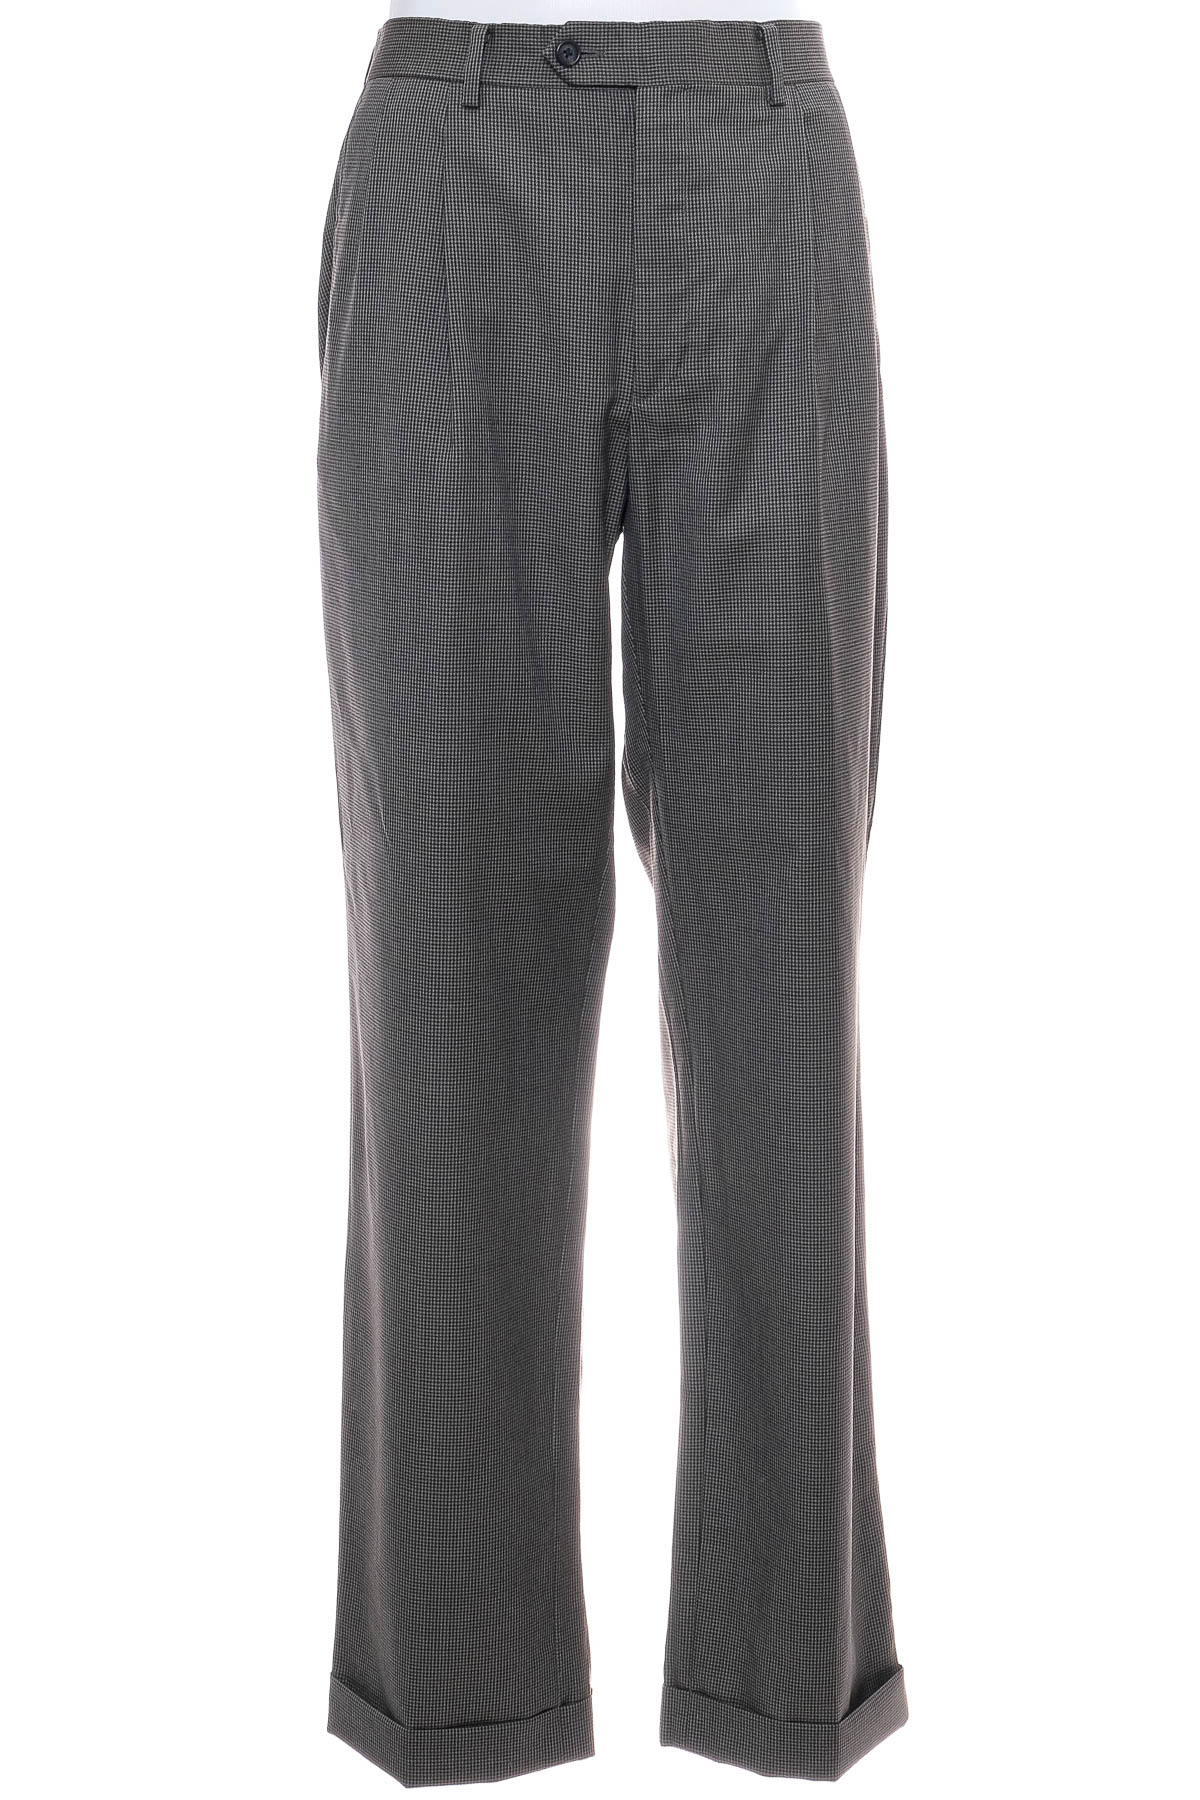 Pantalon pentru bărbați - LAUREN RALPH LAUREN - 0